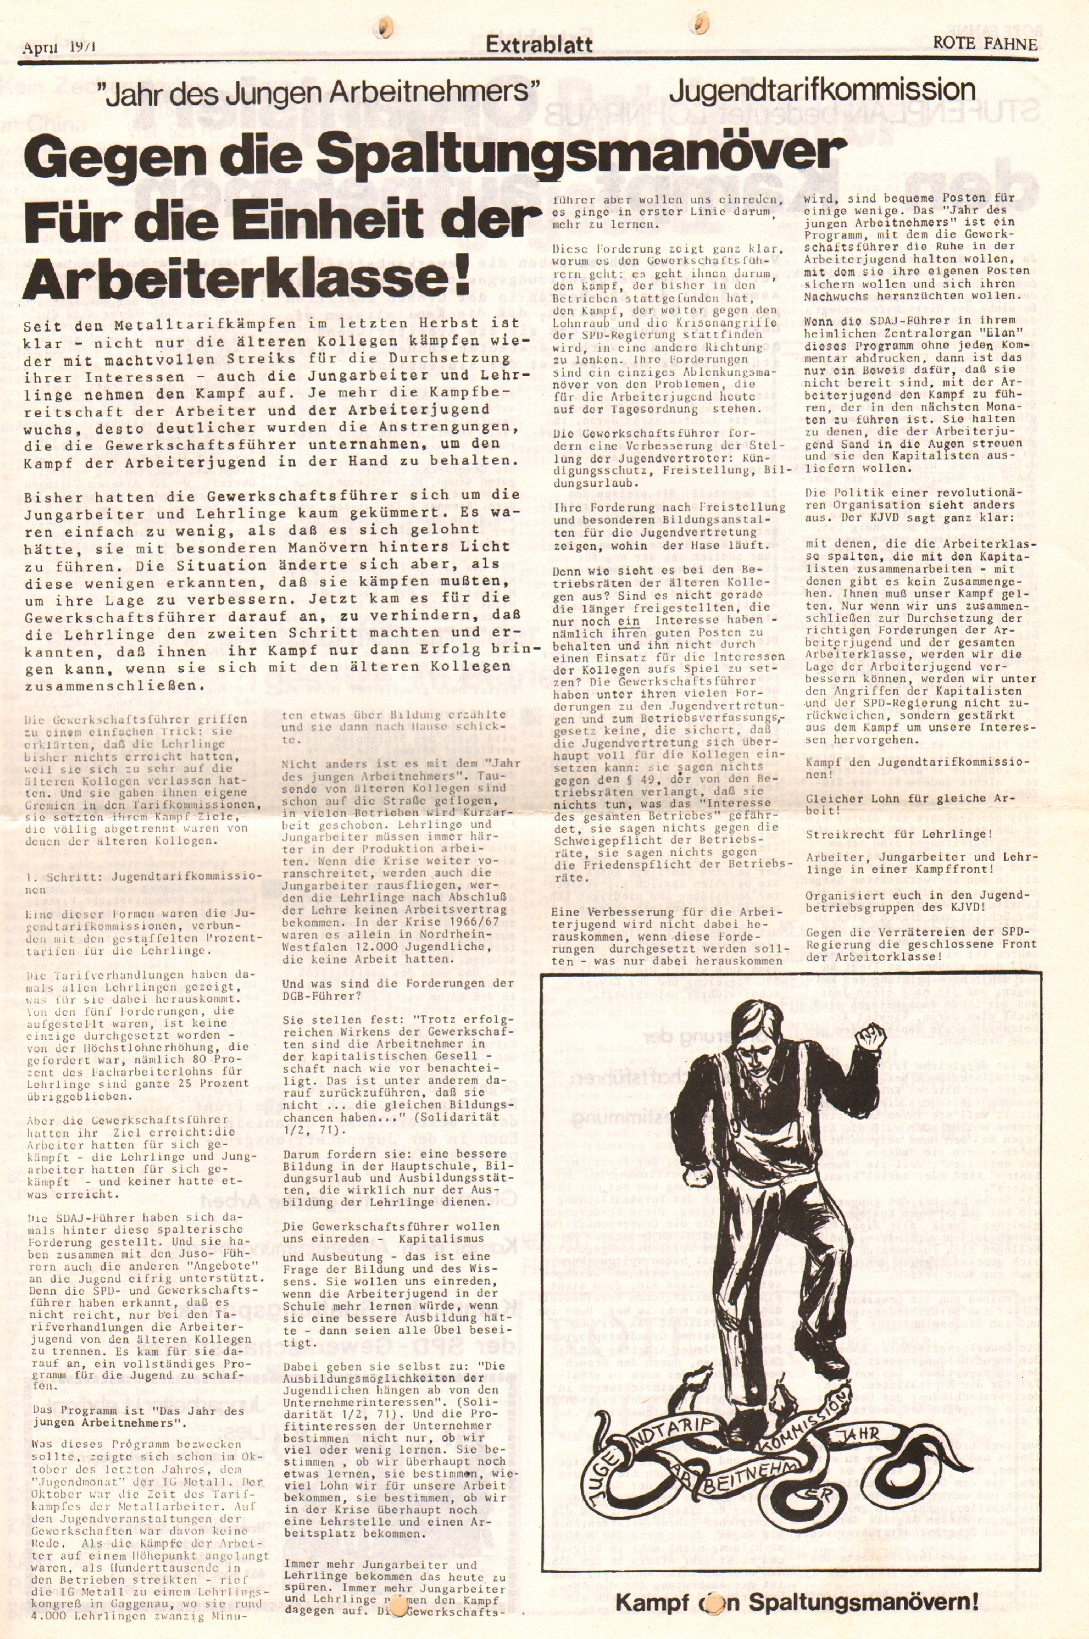 Rote Fahne, 2. Jg., April 1971, Extrablatt, Seite 3